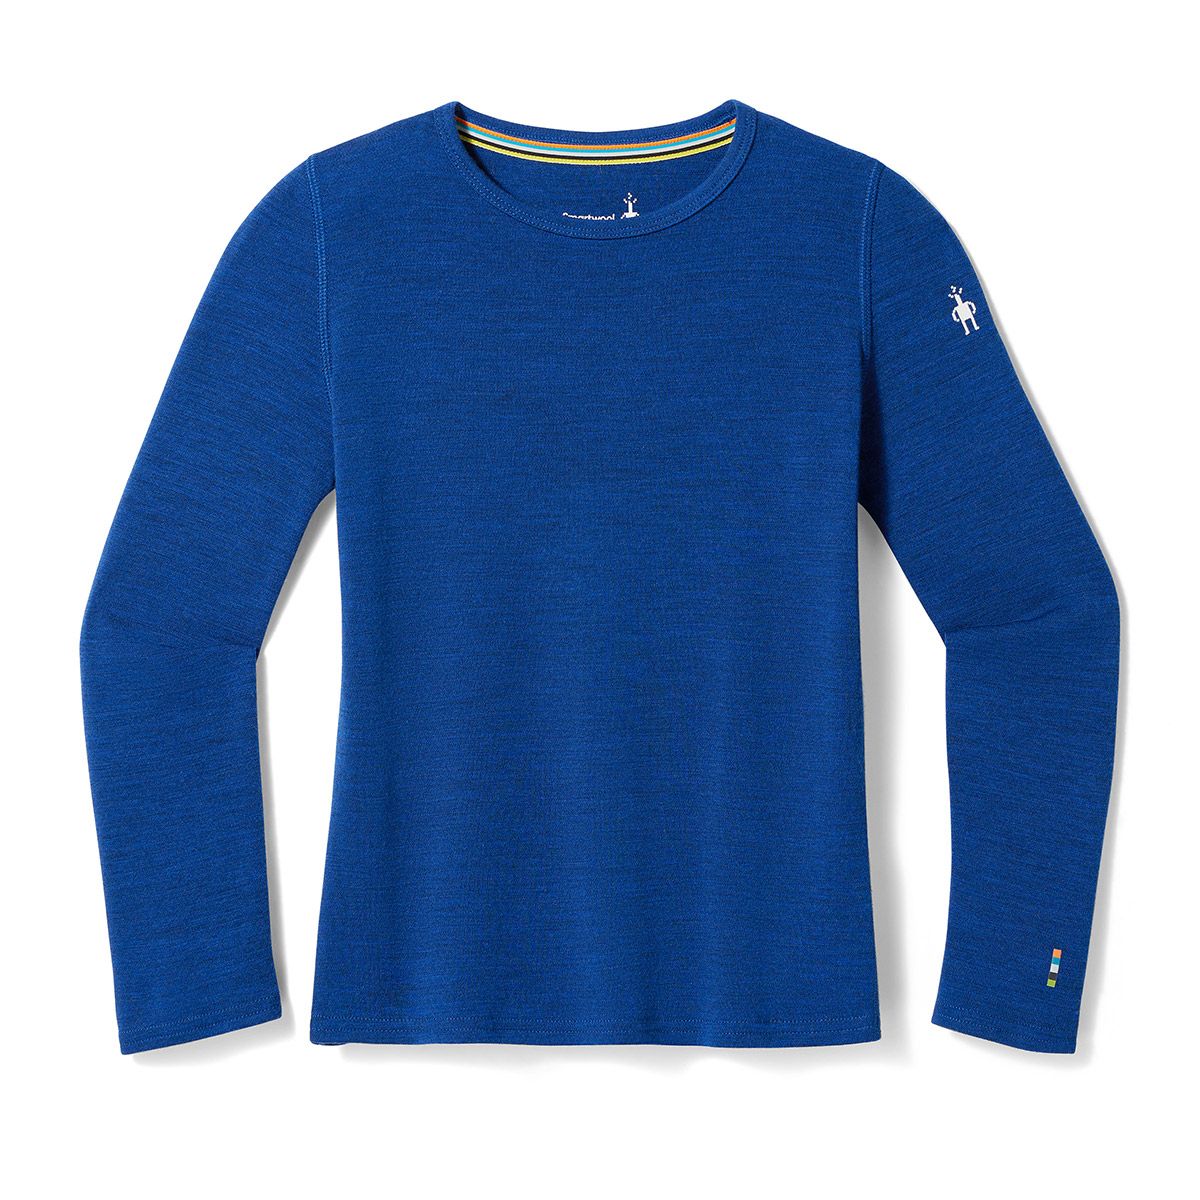 Kid's Short Sleeve Thermal Shirt: Warm and Thin Base Layer Top, Organic  Merino Wool Silk, Sizes 2-15 Years 7-8 Years Natural